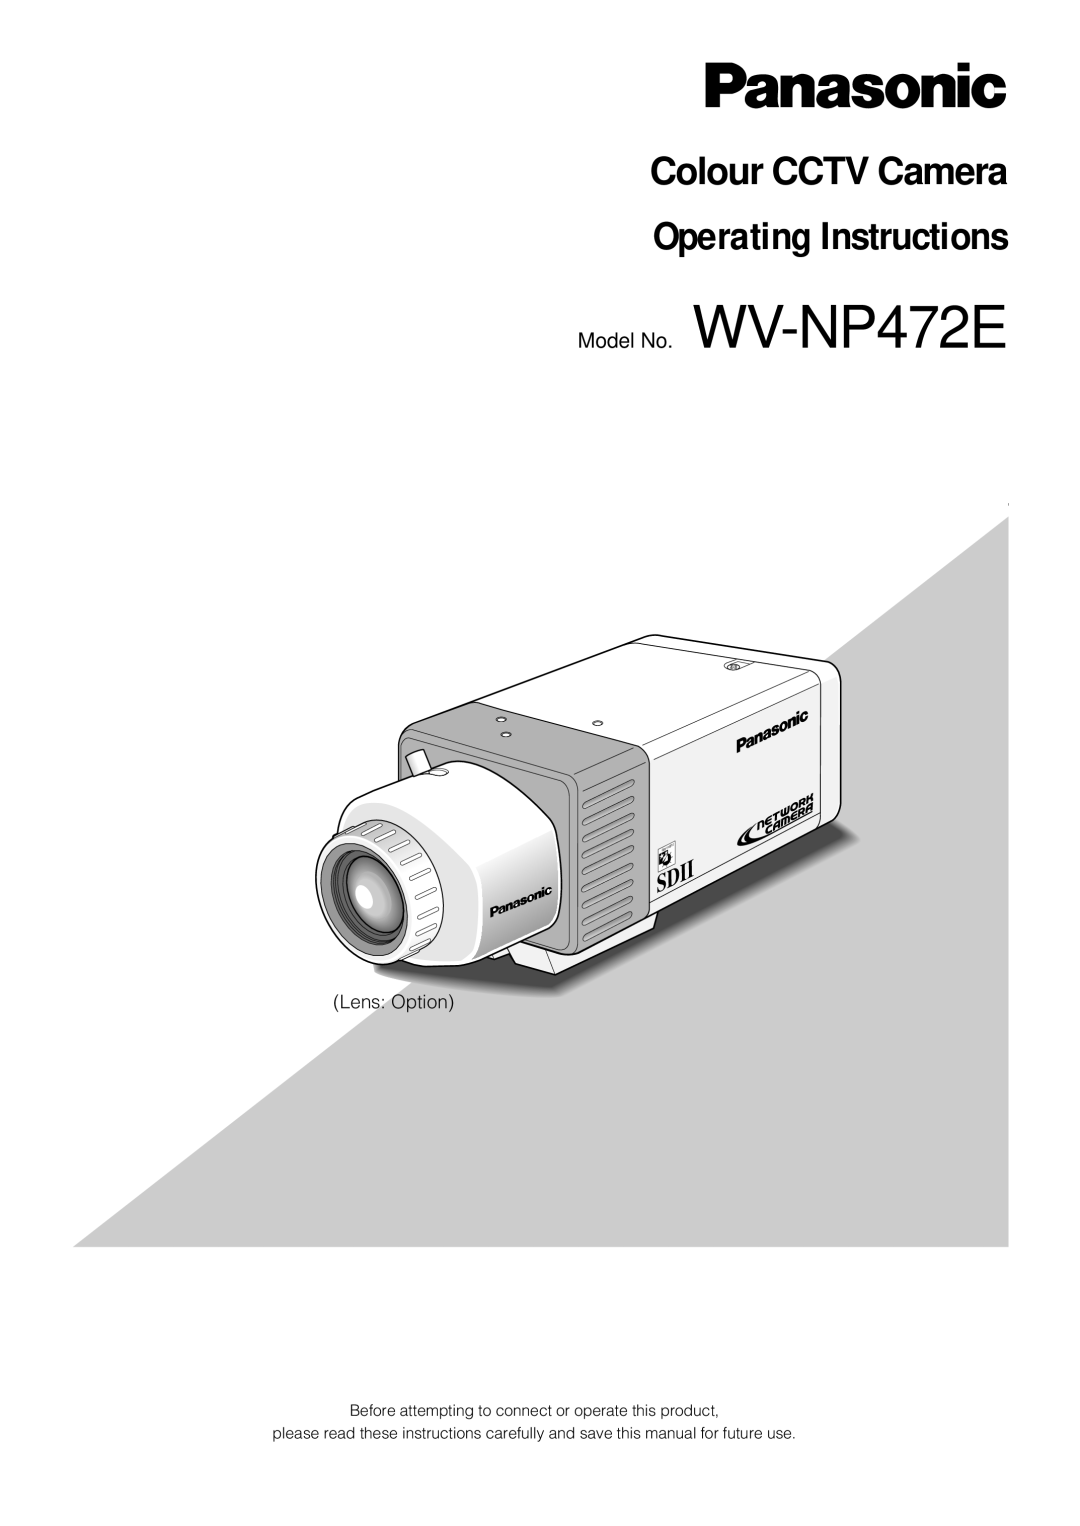 Panasonic operating instructions Operating Instructions, Colour CCTV Camera, Model No. WV-NP472E, Lens Option 